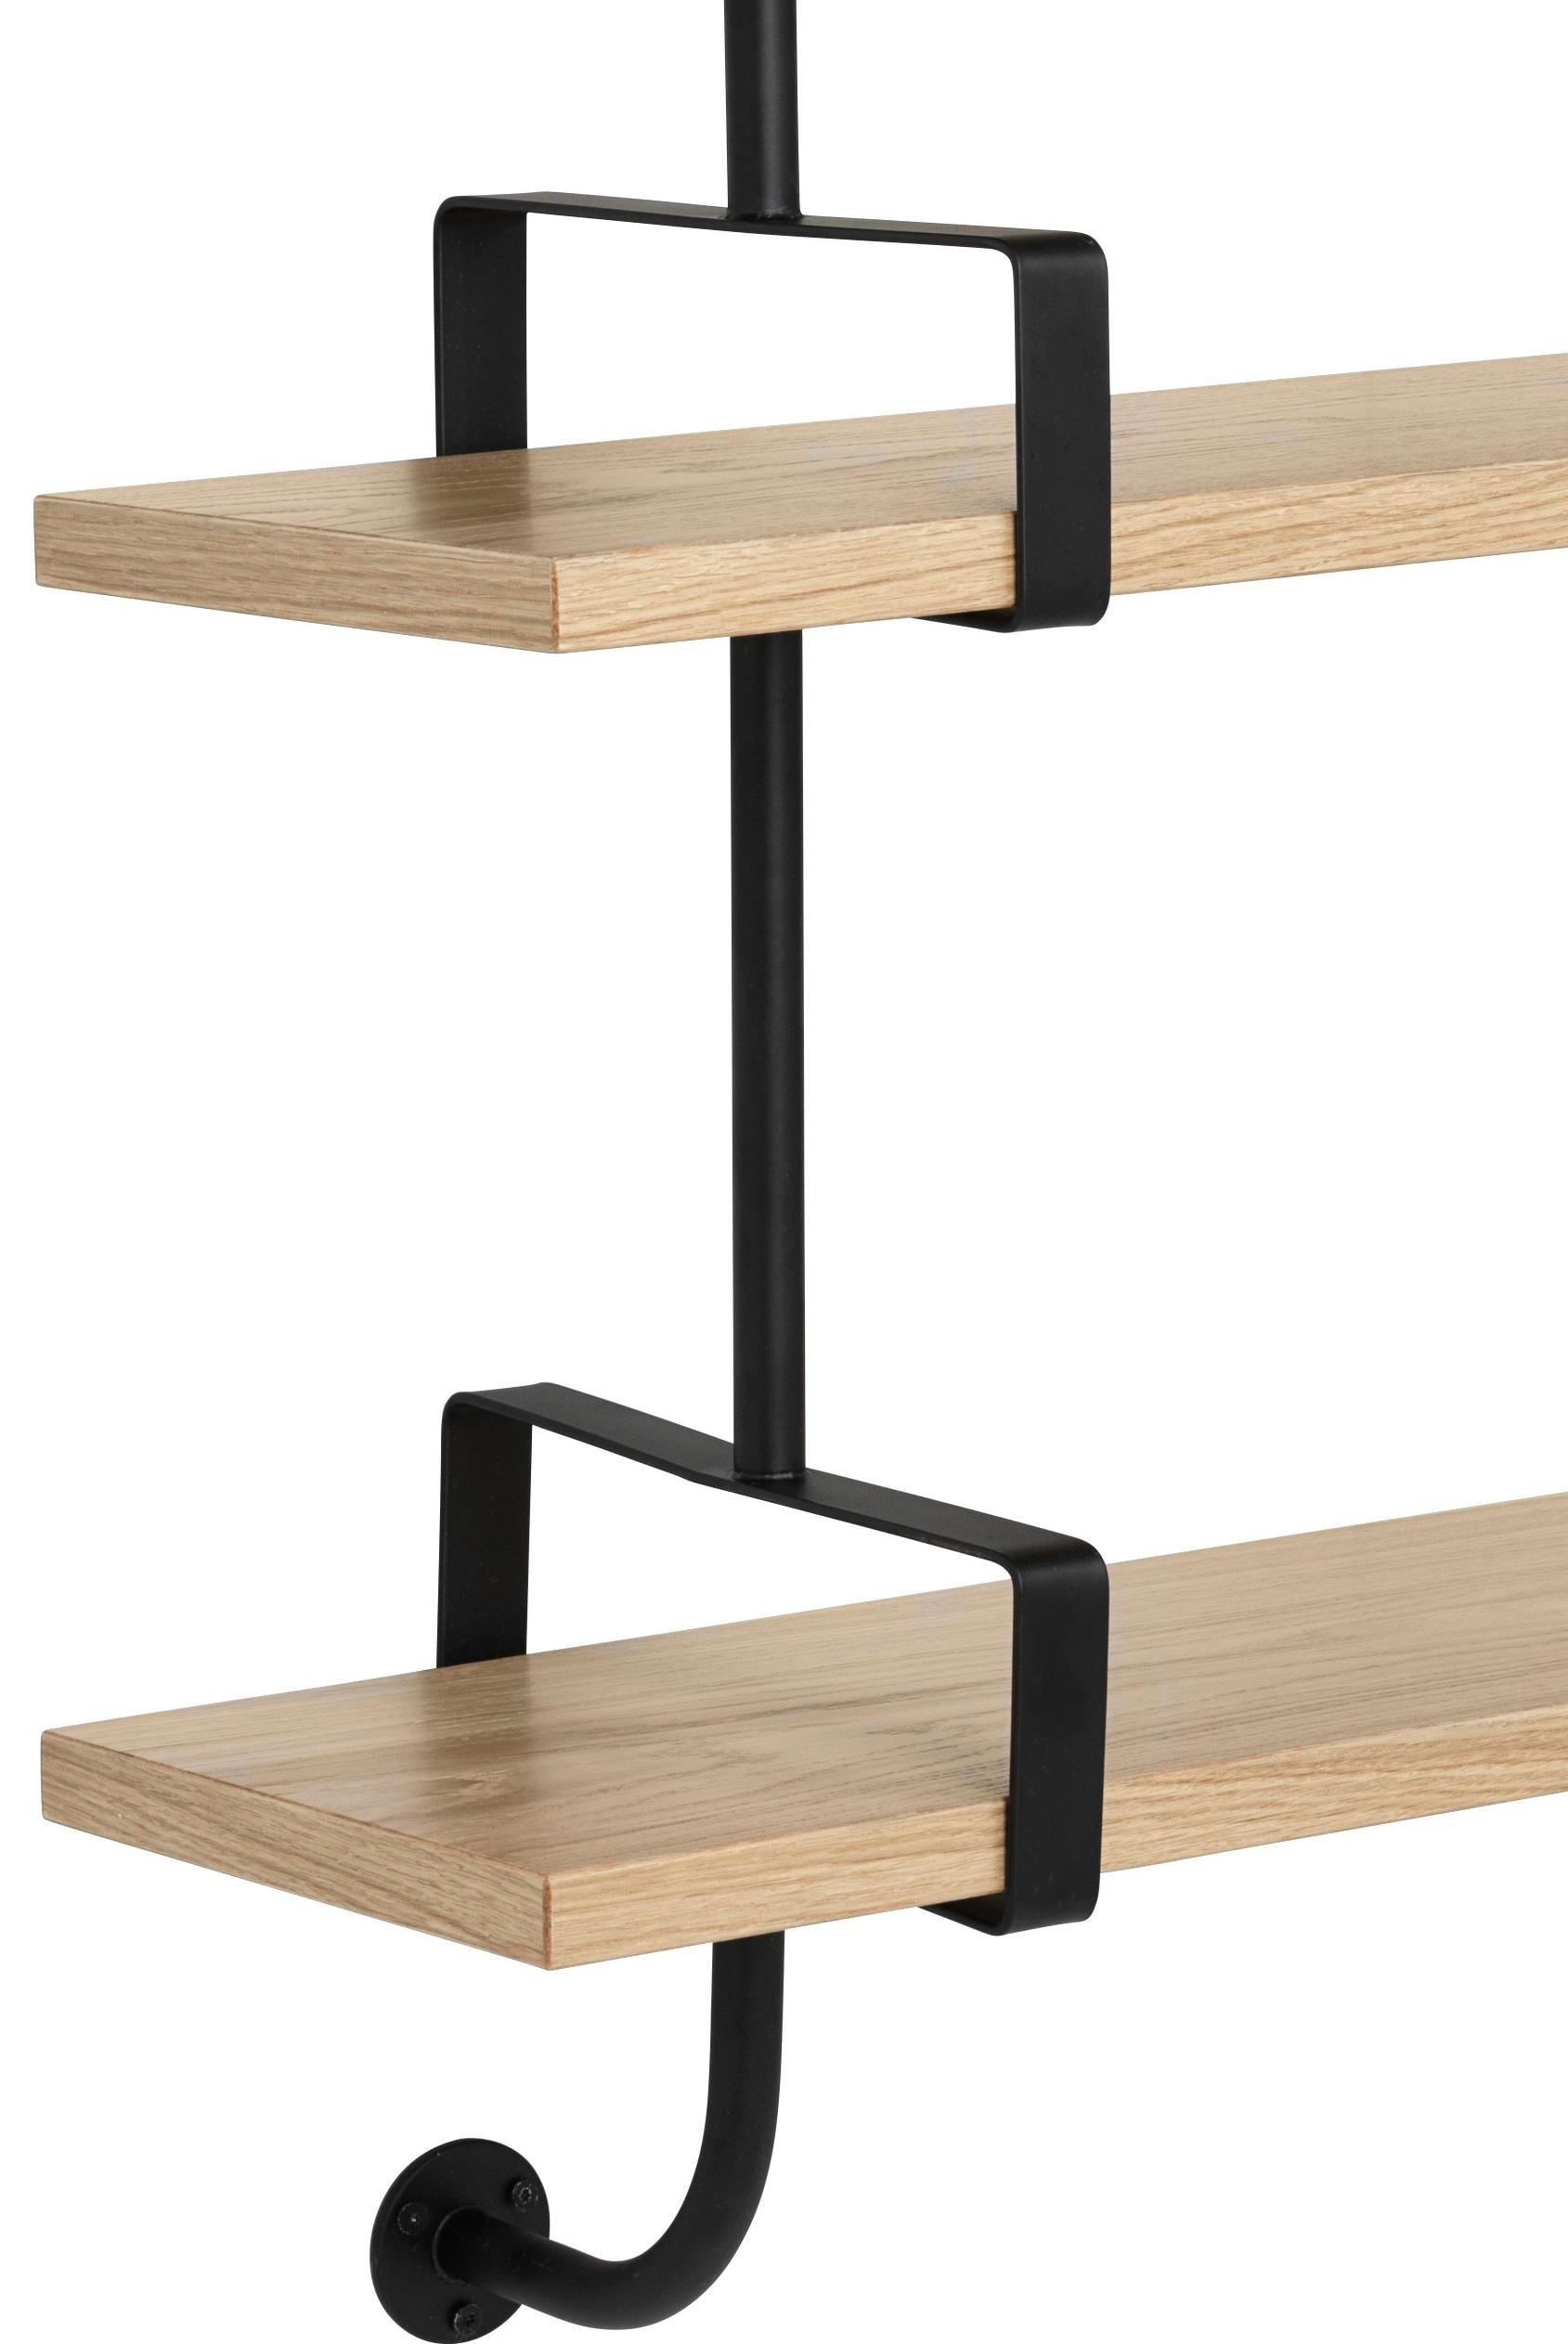 Lacquered Mathieu Matégot 'Démon' 5-Shelf System for GUBI in Oak For Sale